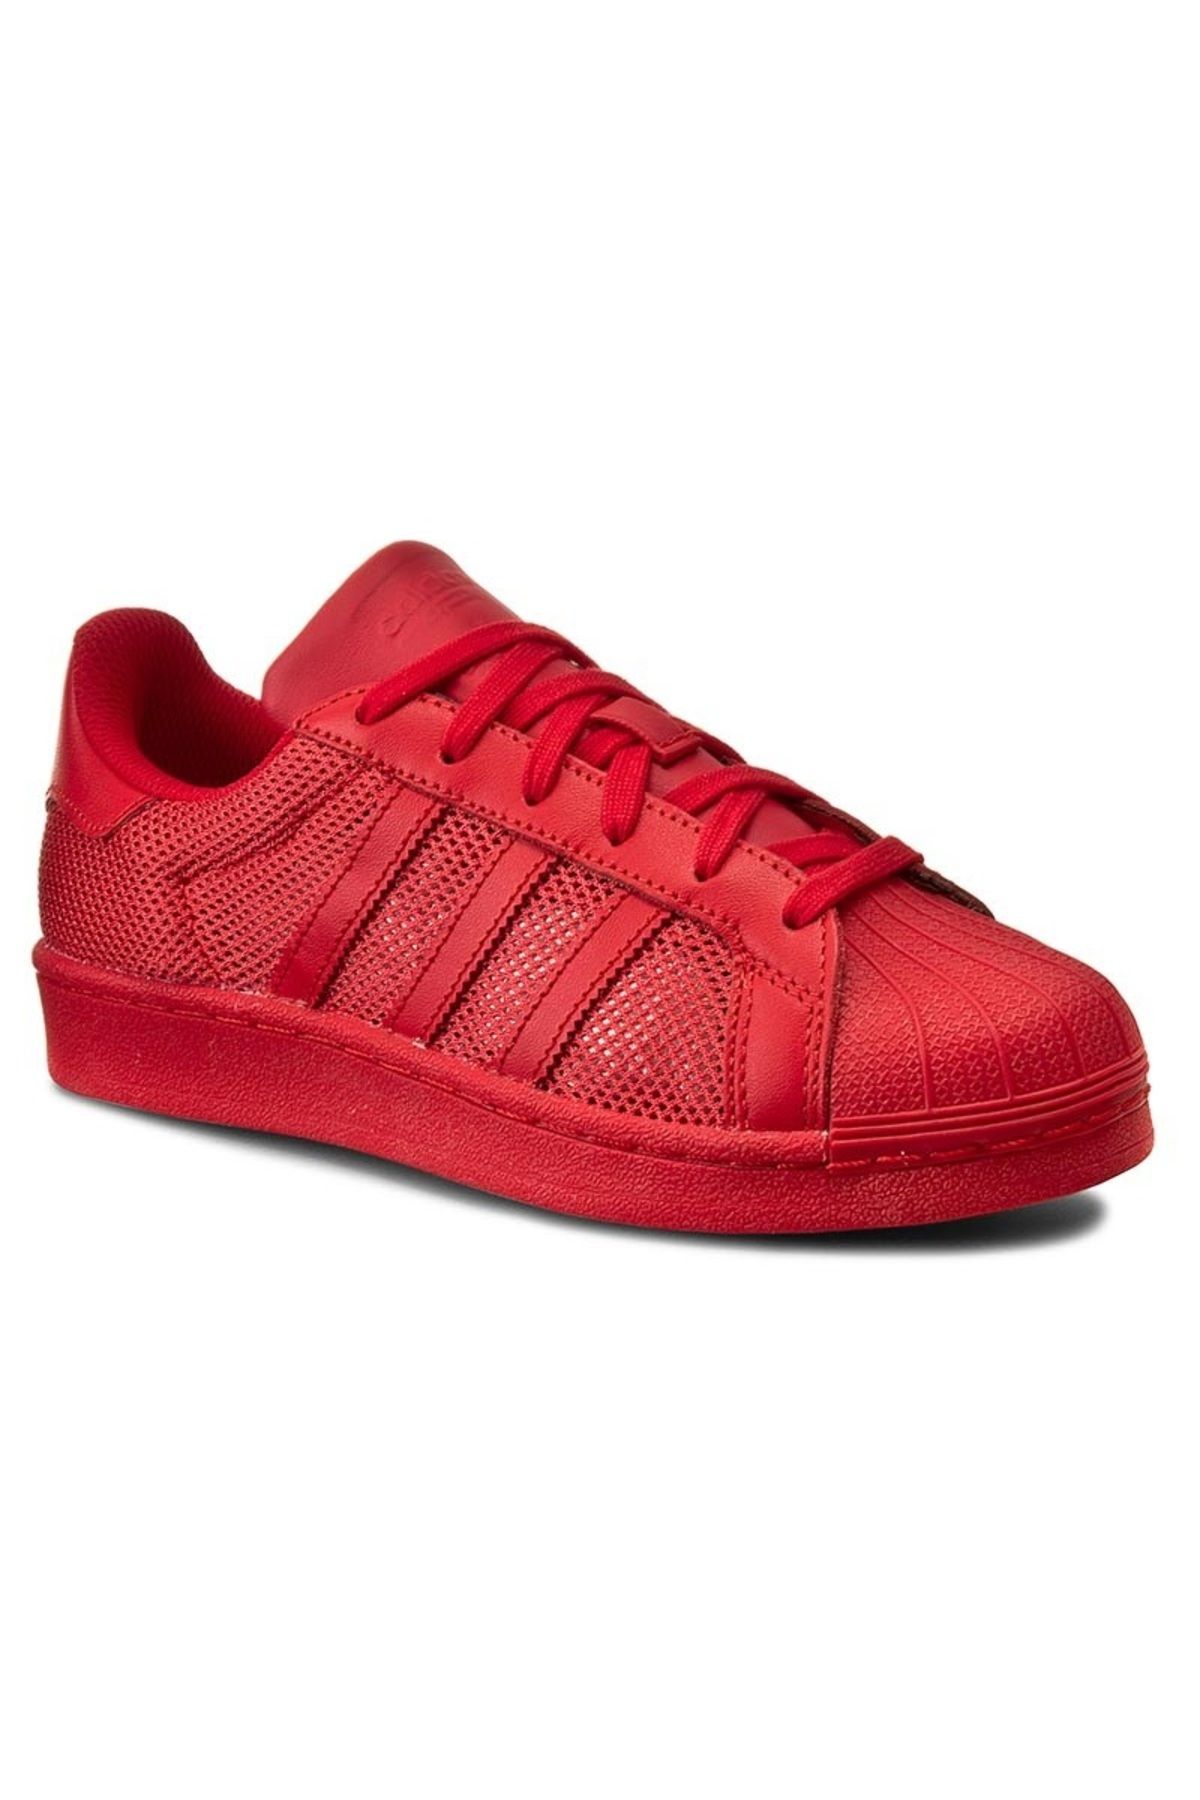 adidas Superstar Erkek Ayakkabı B42621